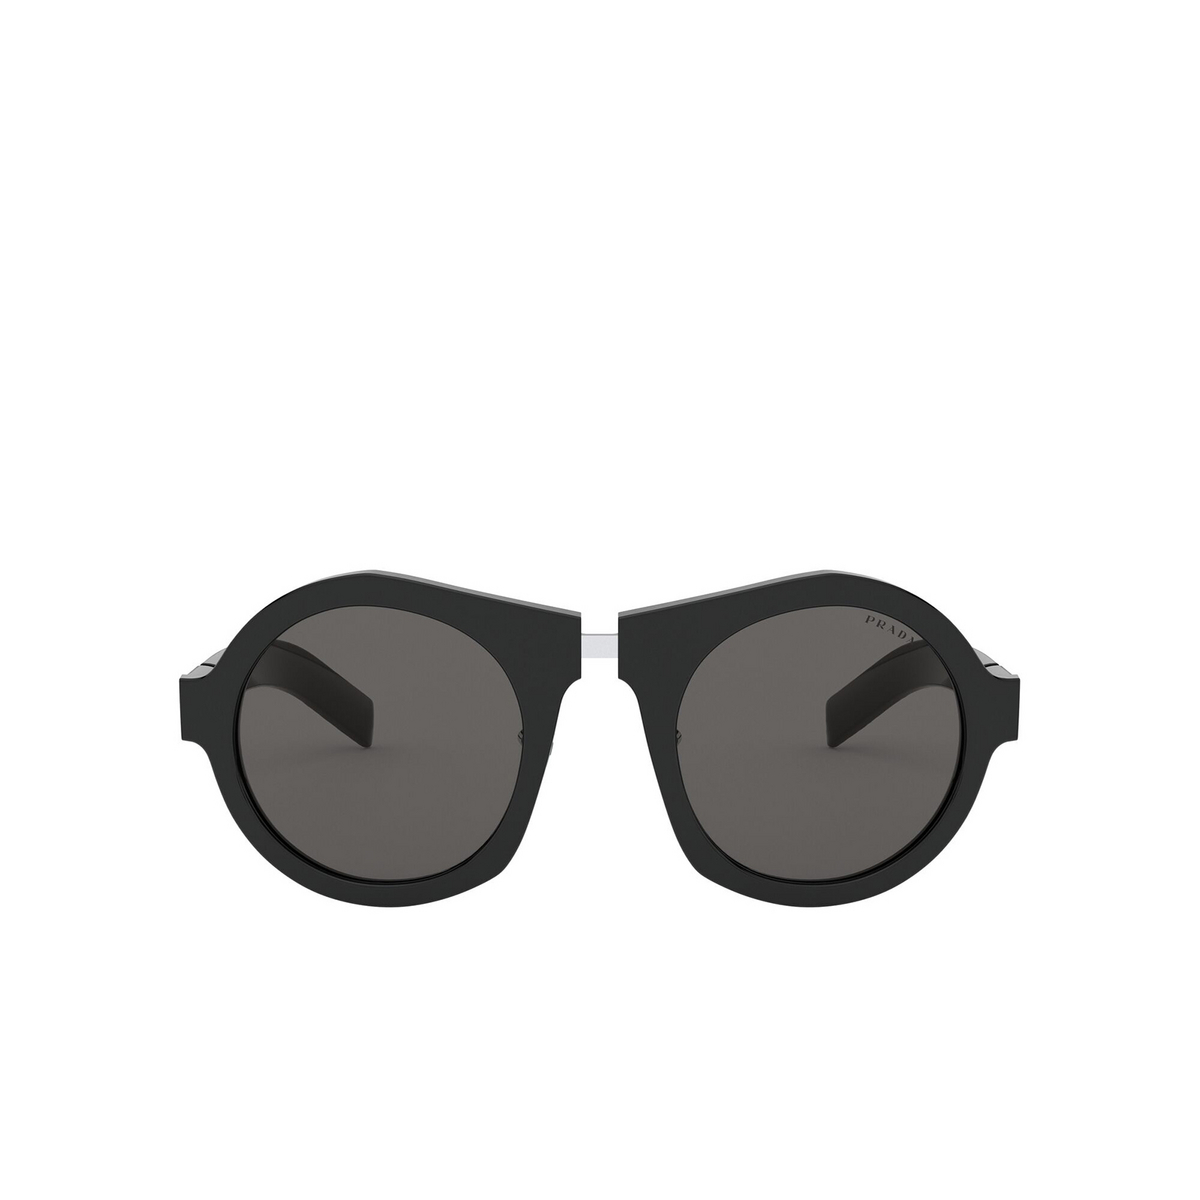 Prada® Round Sunglasses: PR 10XS color Black 1AB5S0 - front view.